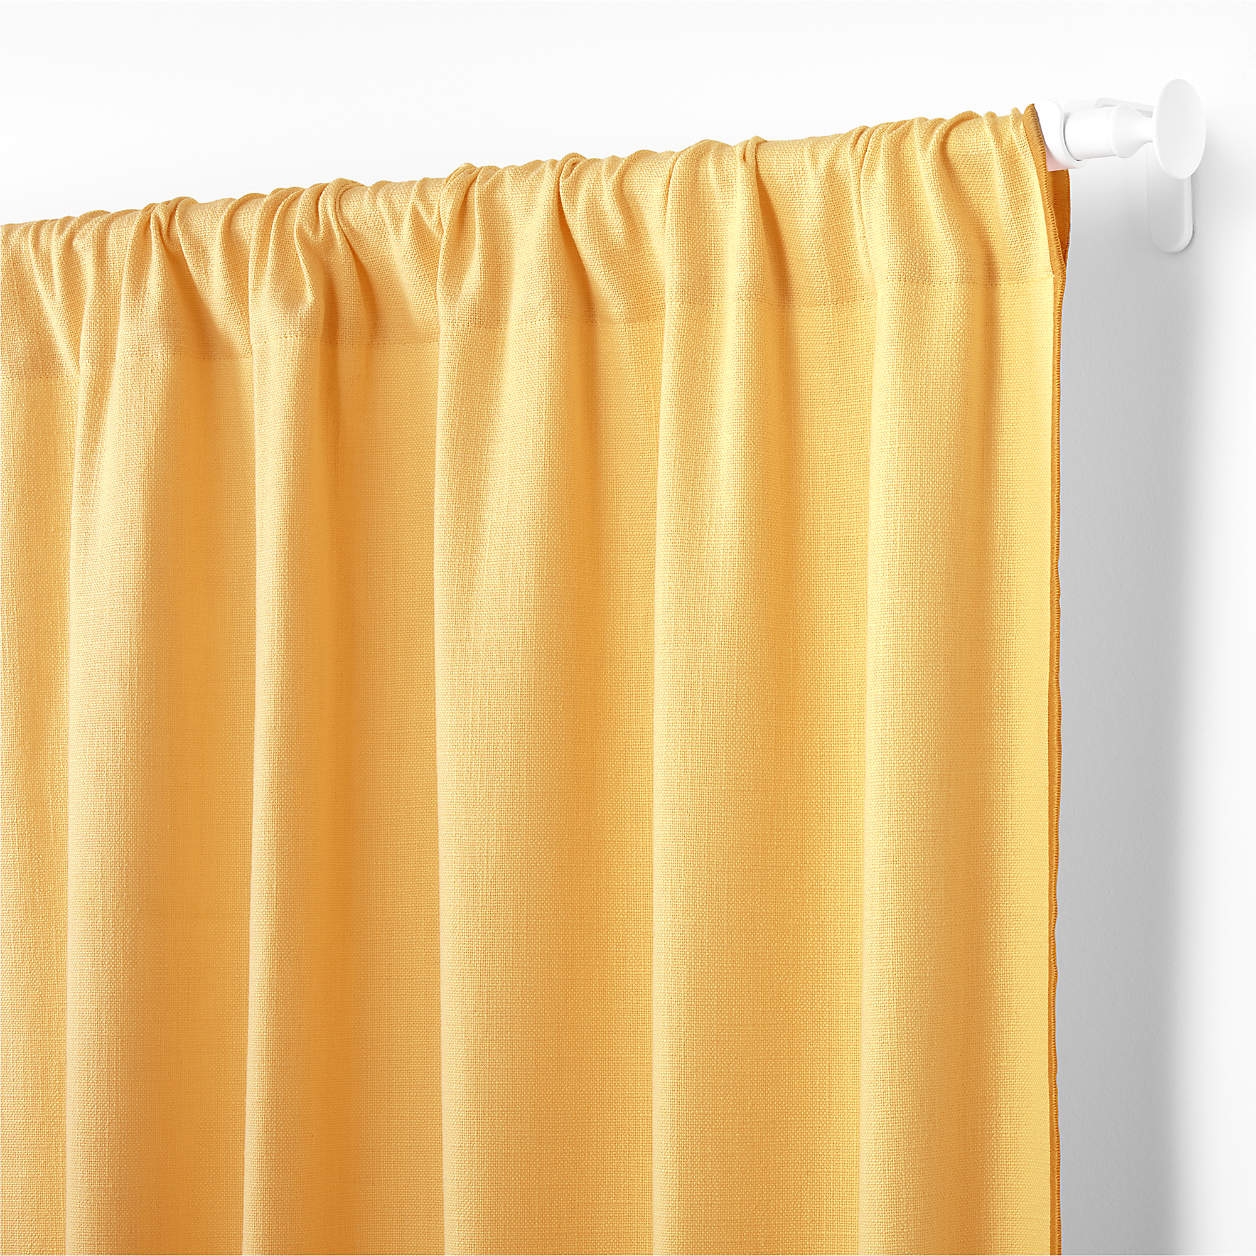 Ori Yellow Cotton Window Curtain Panel 44"x96" - Image 1